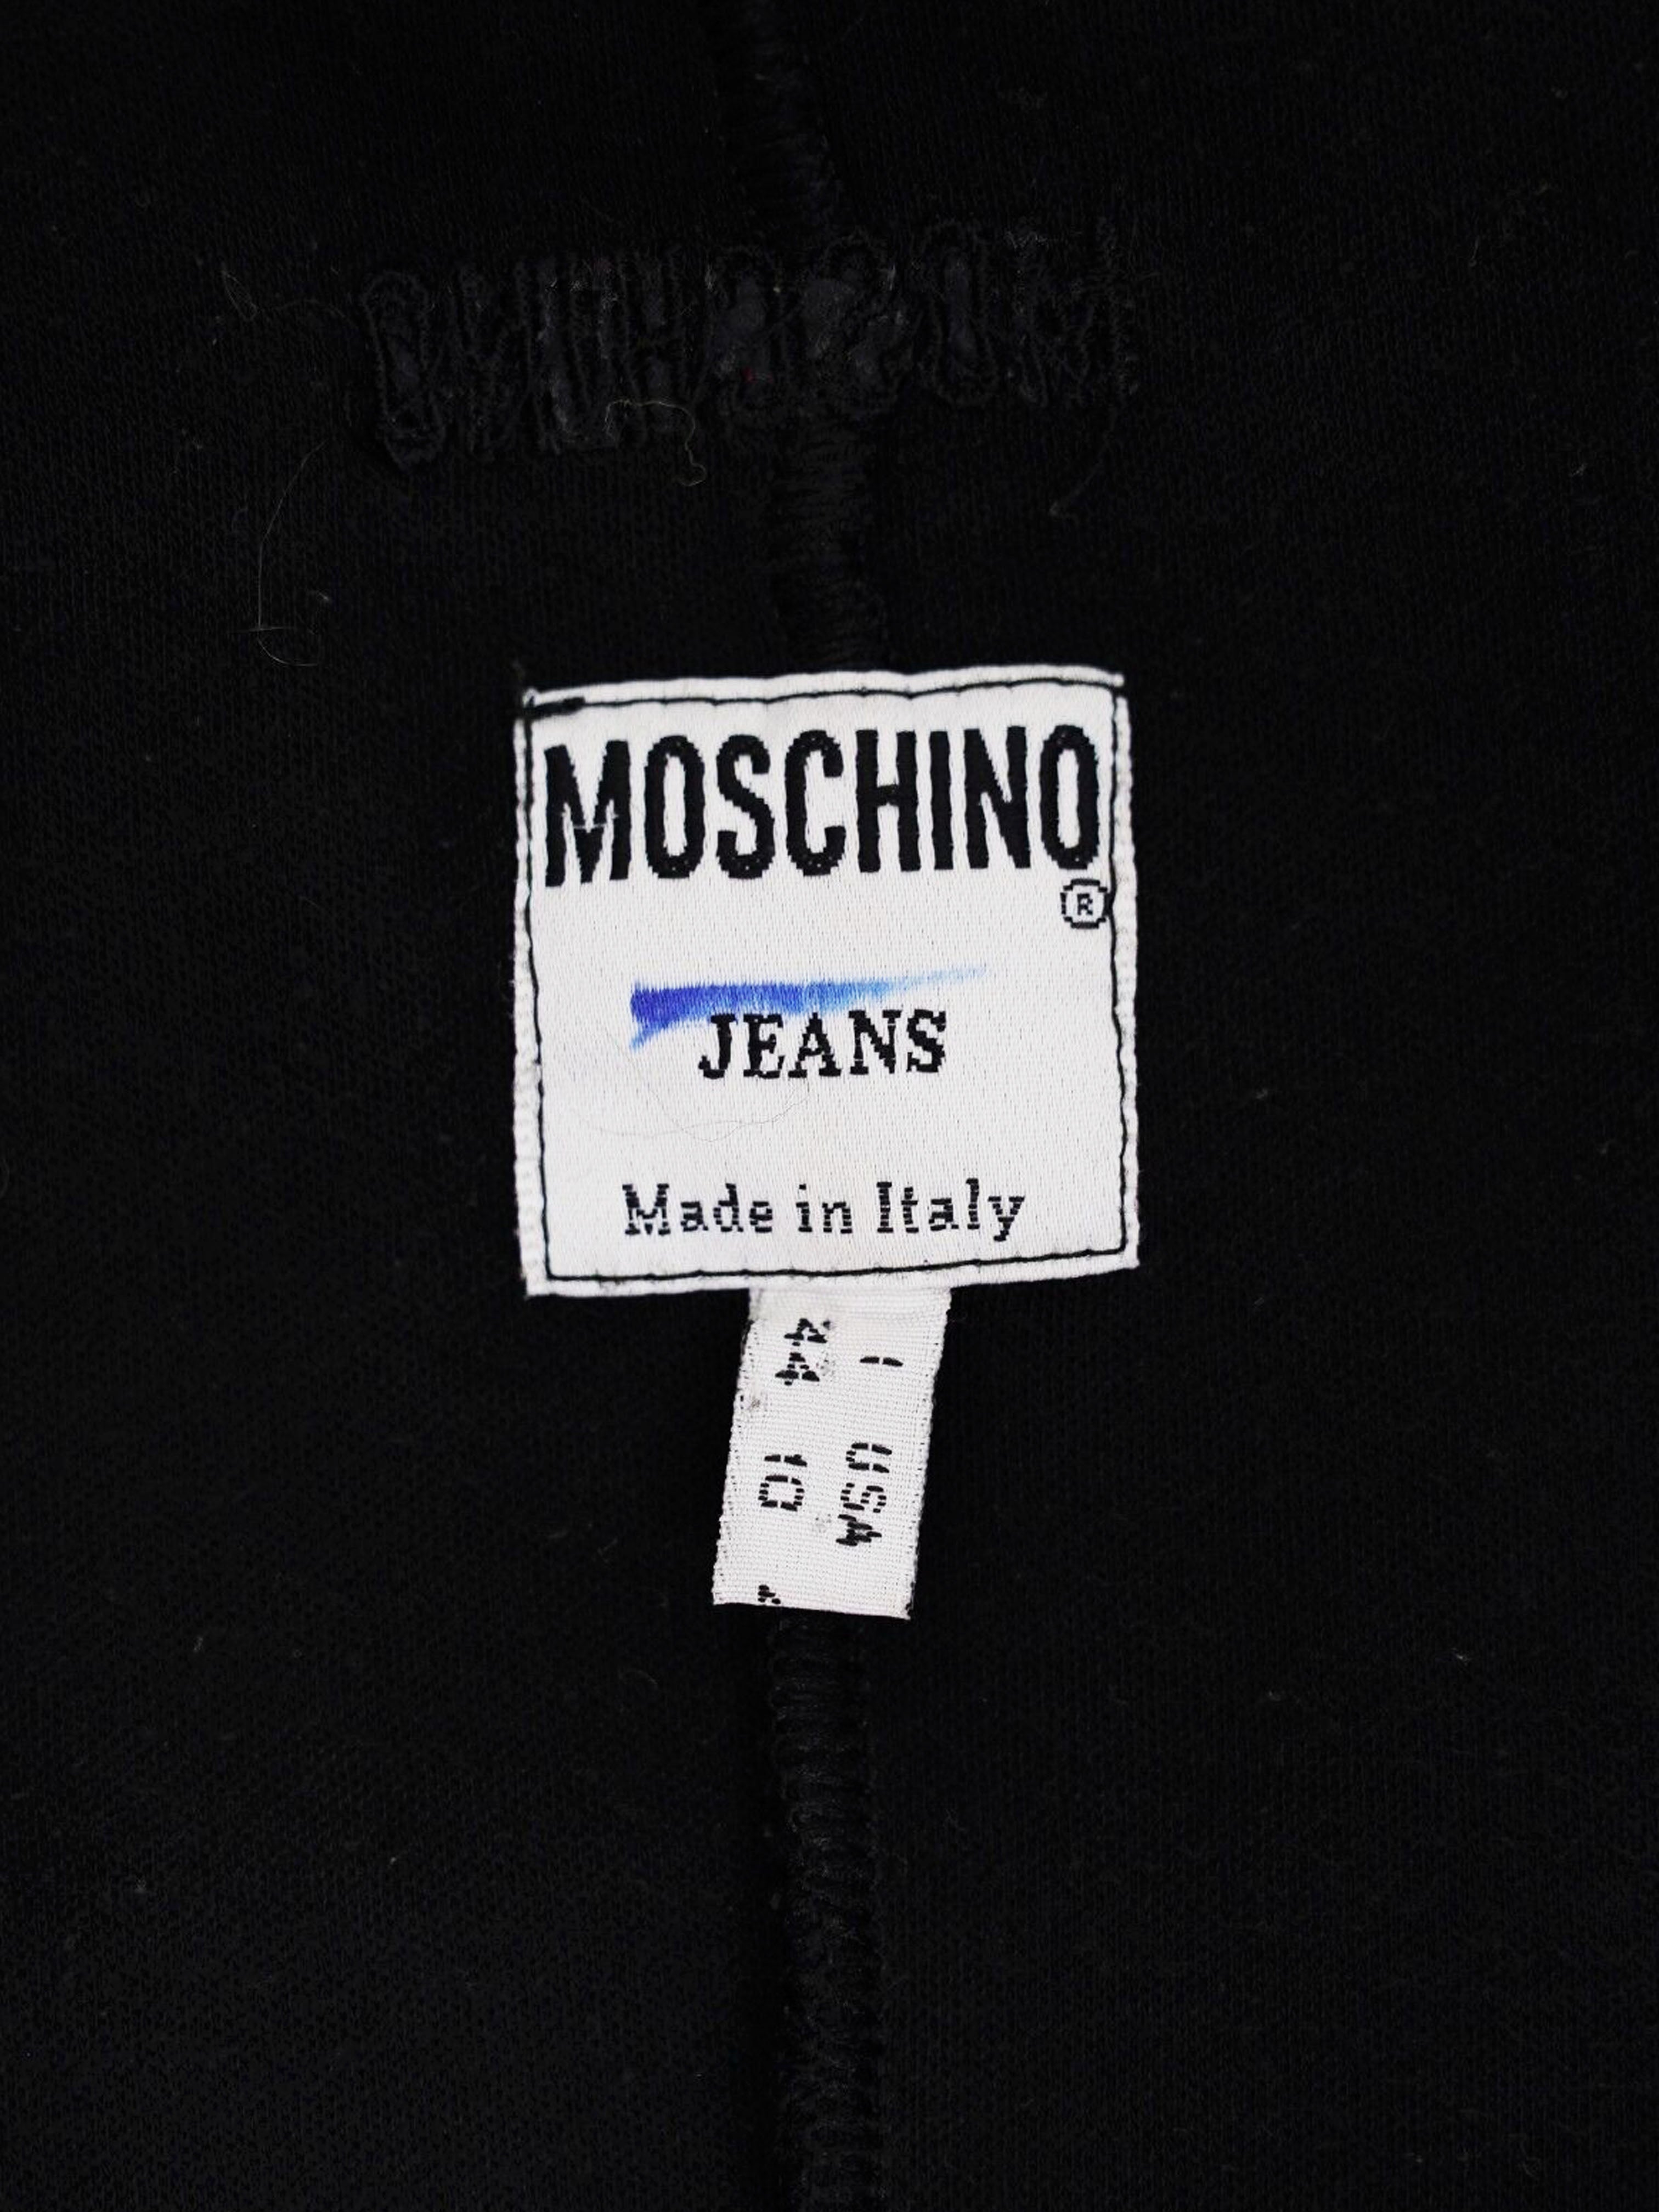 Moschino Jeans 1990s "The Nanny" Black and White Mini Dress